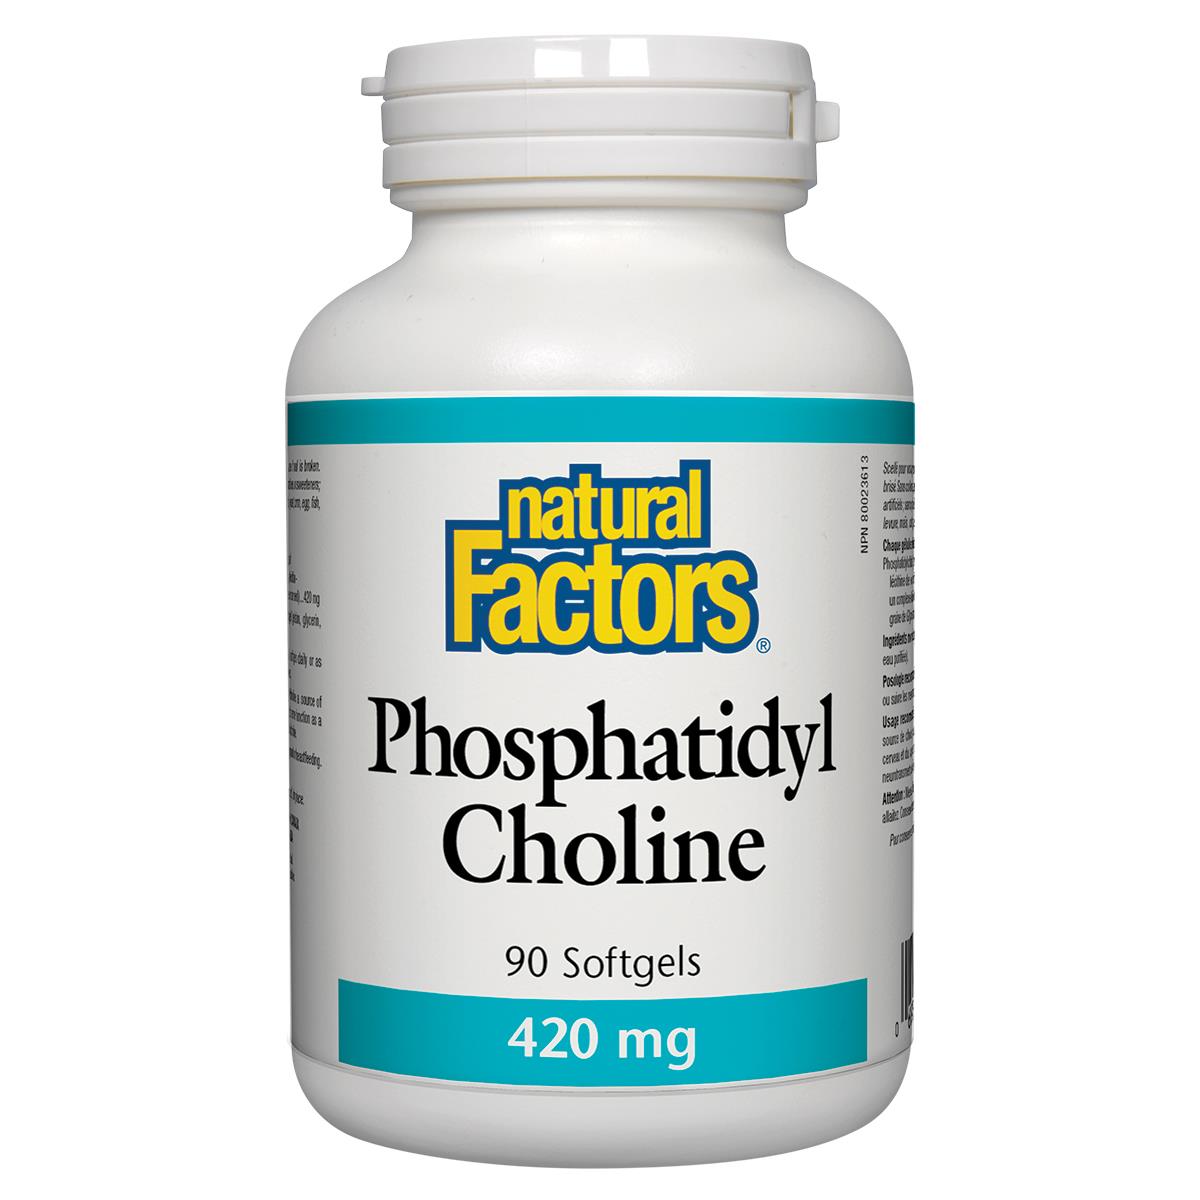 Natural Factors Phosphatidyl Choline (PC), 420mg, 90 Softgels